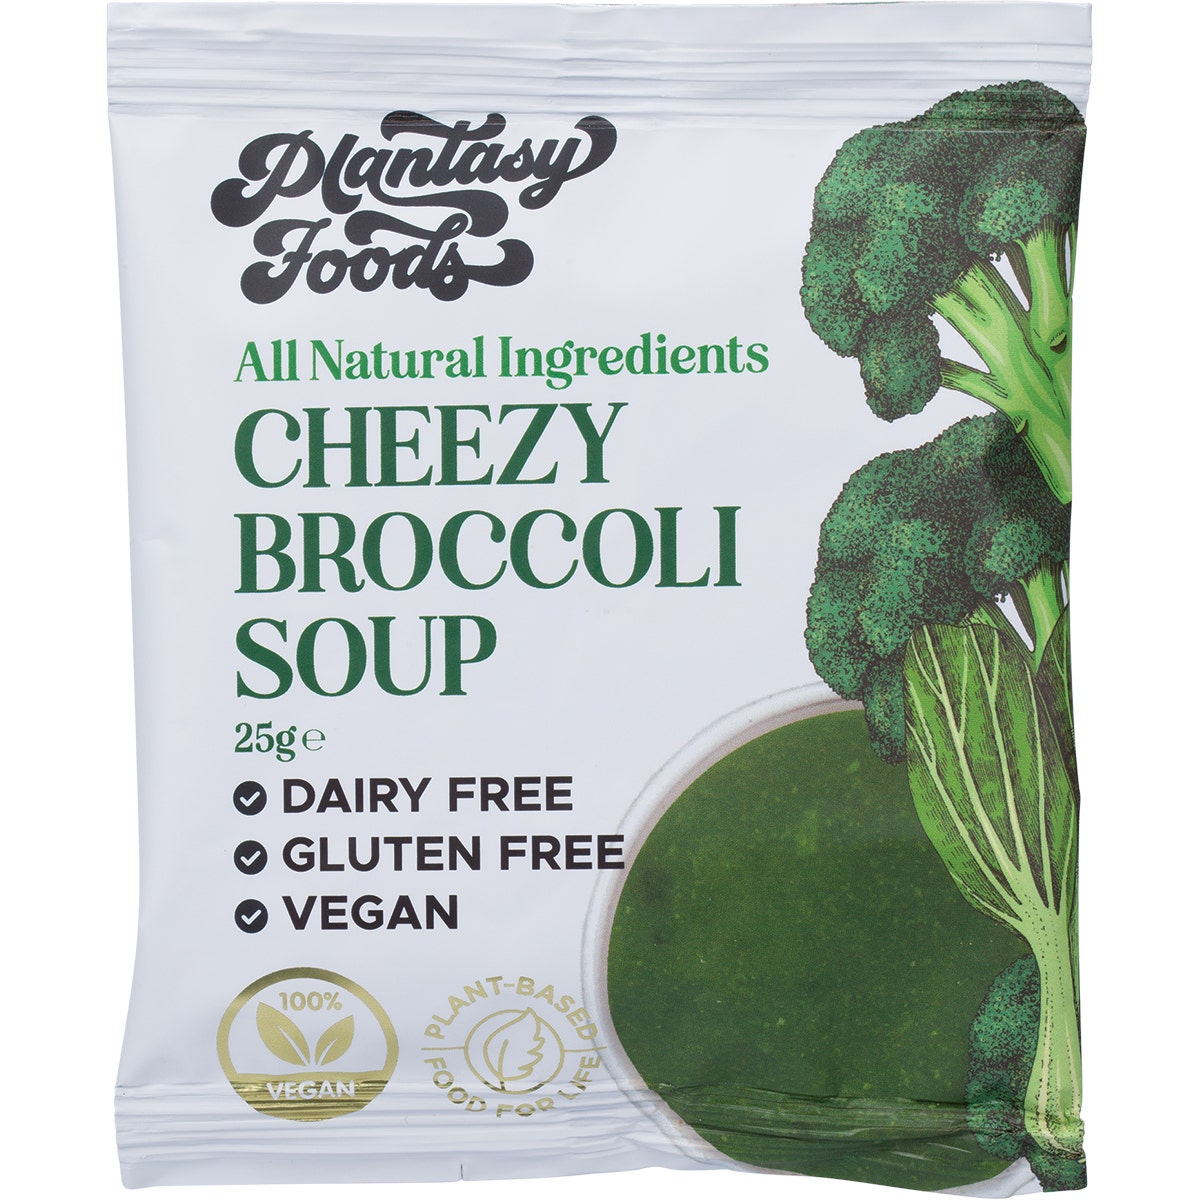 Plantasy Foods Cheezy Broccoli Soup